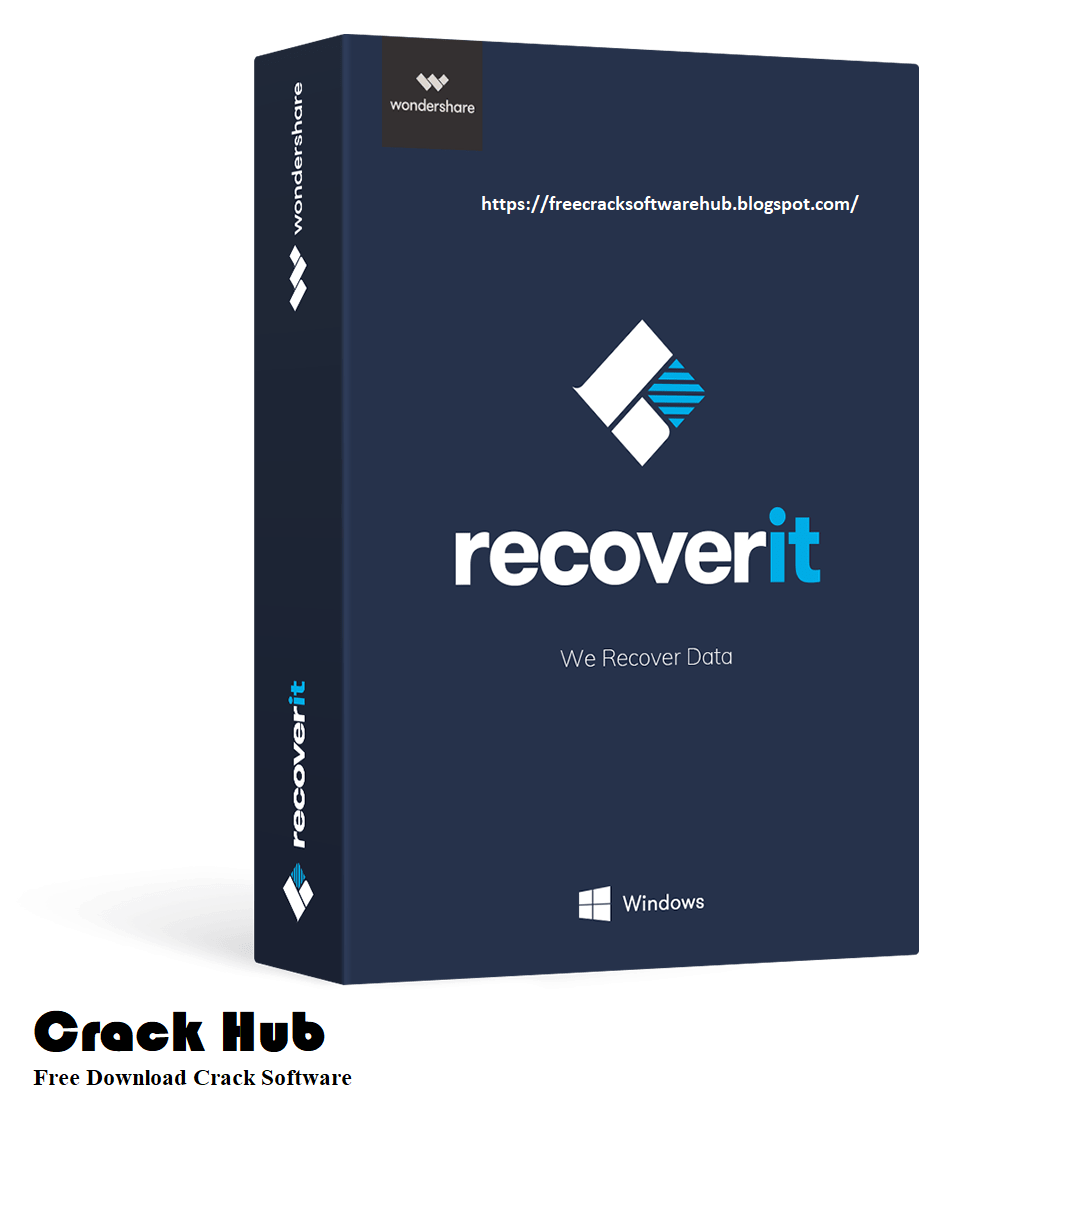 wondershare recoverit crack version download